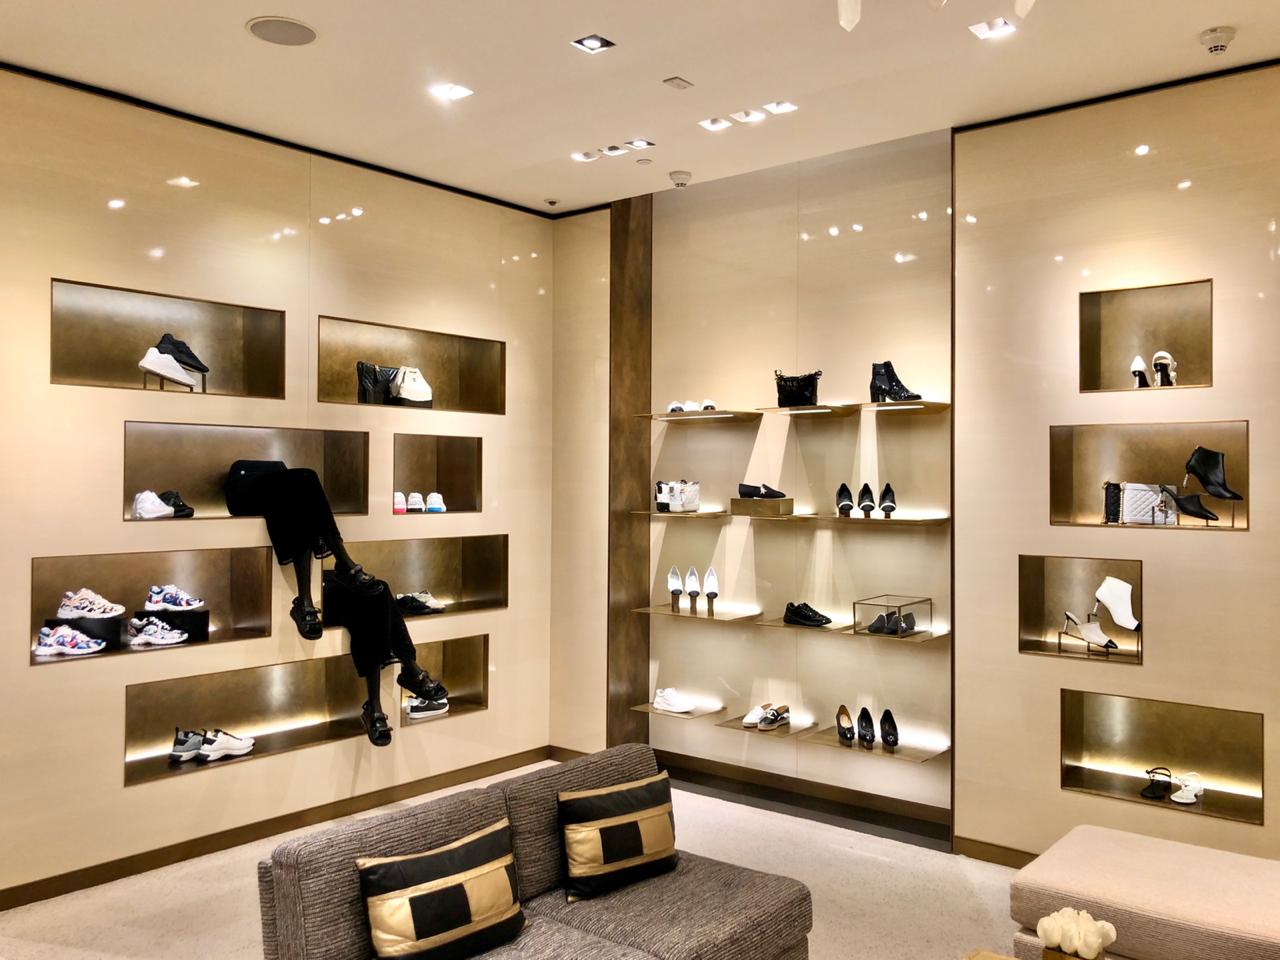 Chanel Dior Entice Gulf Clients to Shop Locally  BoF